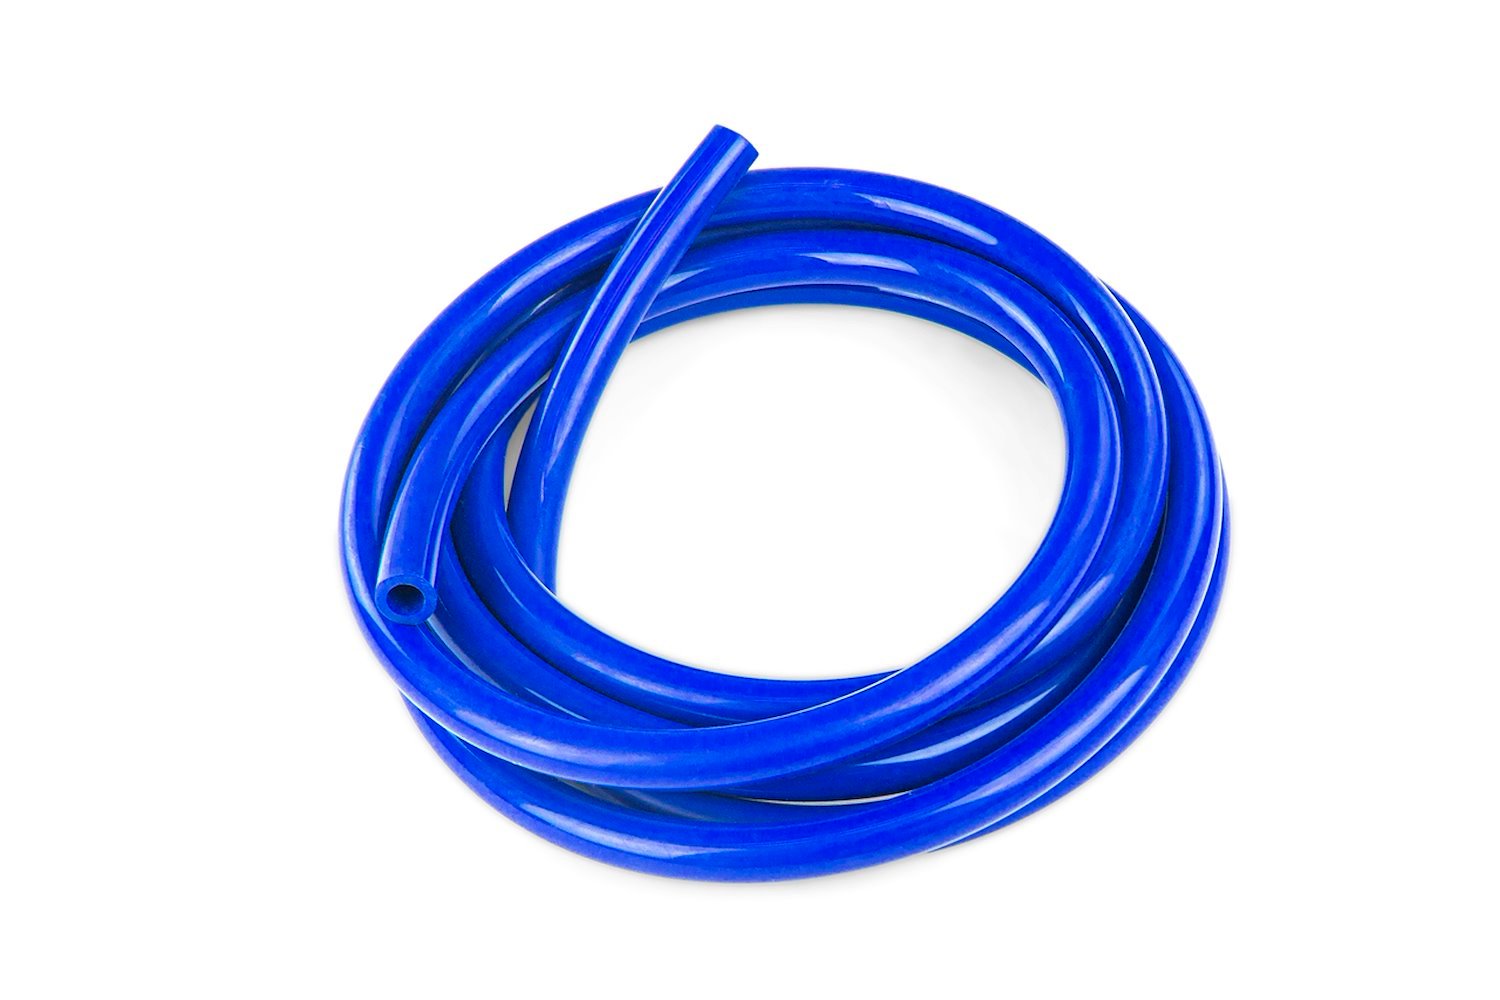 HTSVH95-BLUEx10 High-Temperature Silicone Vacuum Hose Tubing, 3/8 in. ID, 10 ft. Roll, Blue